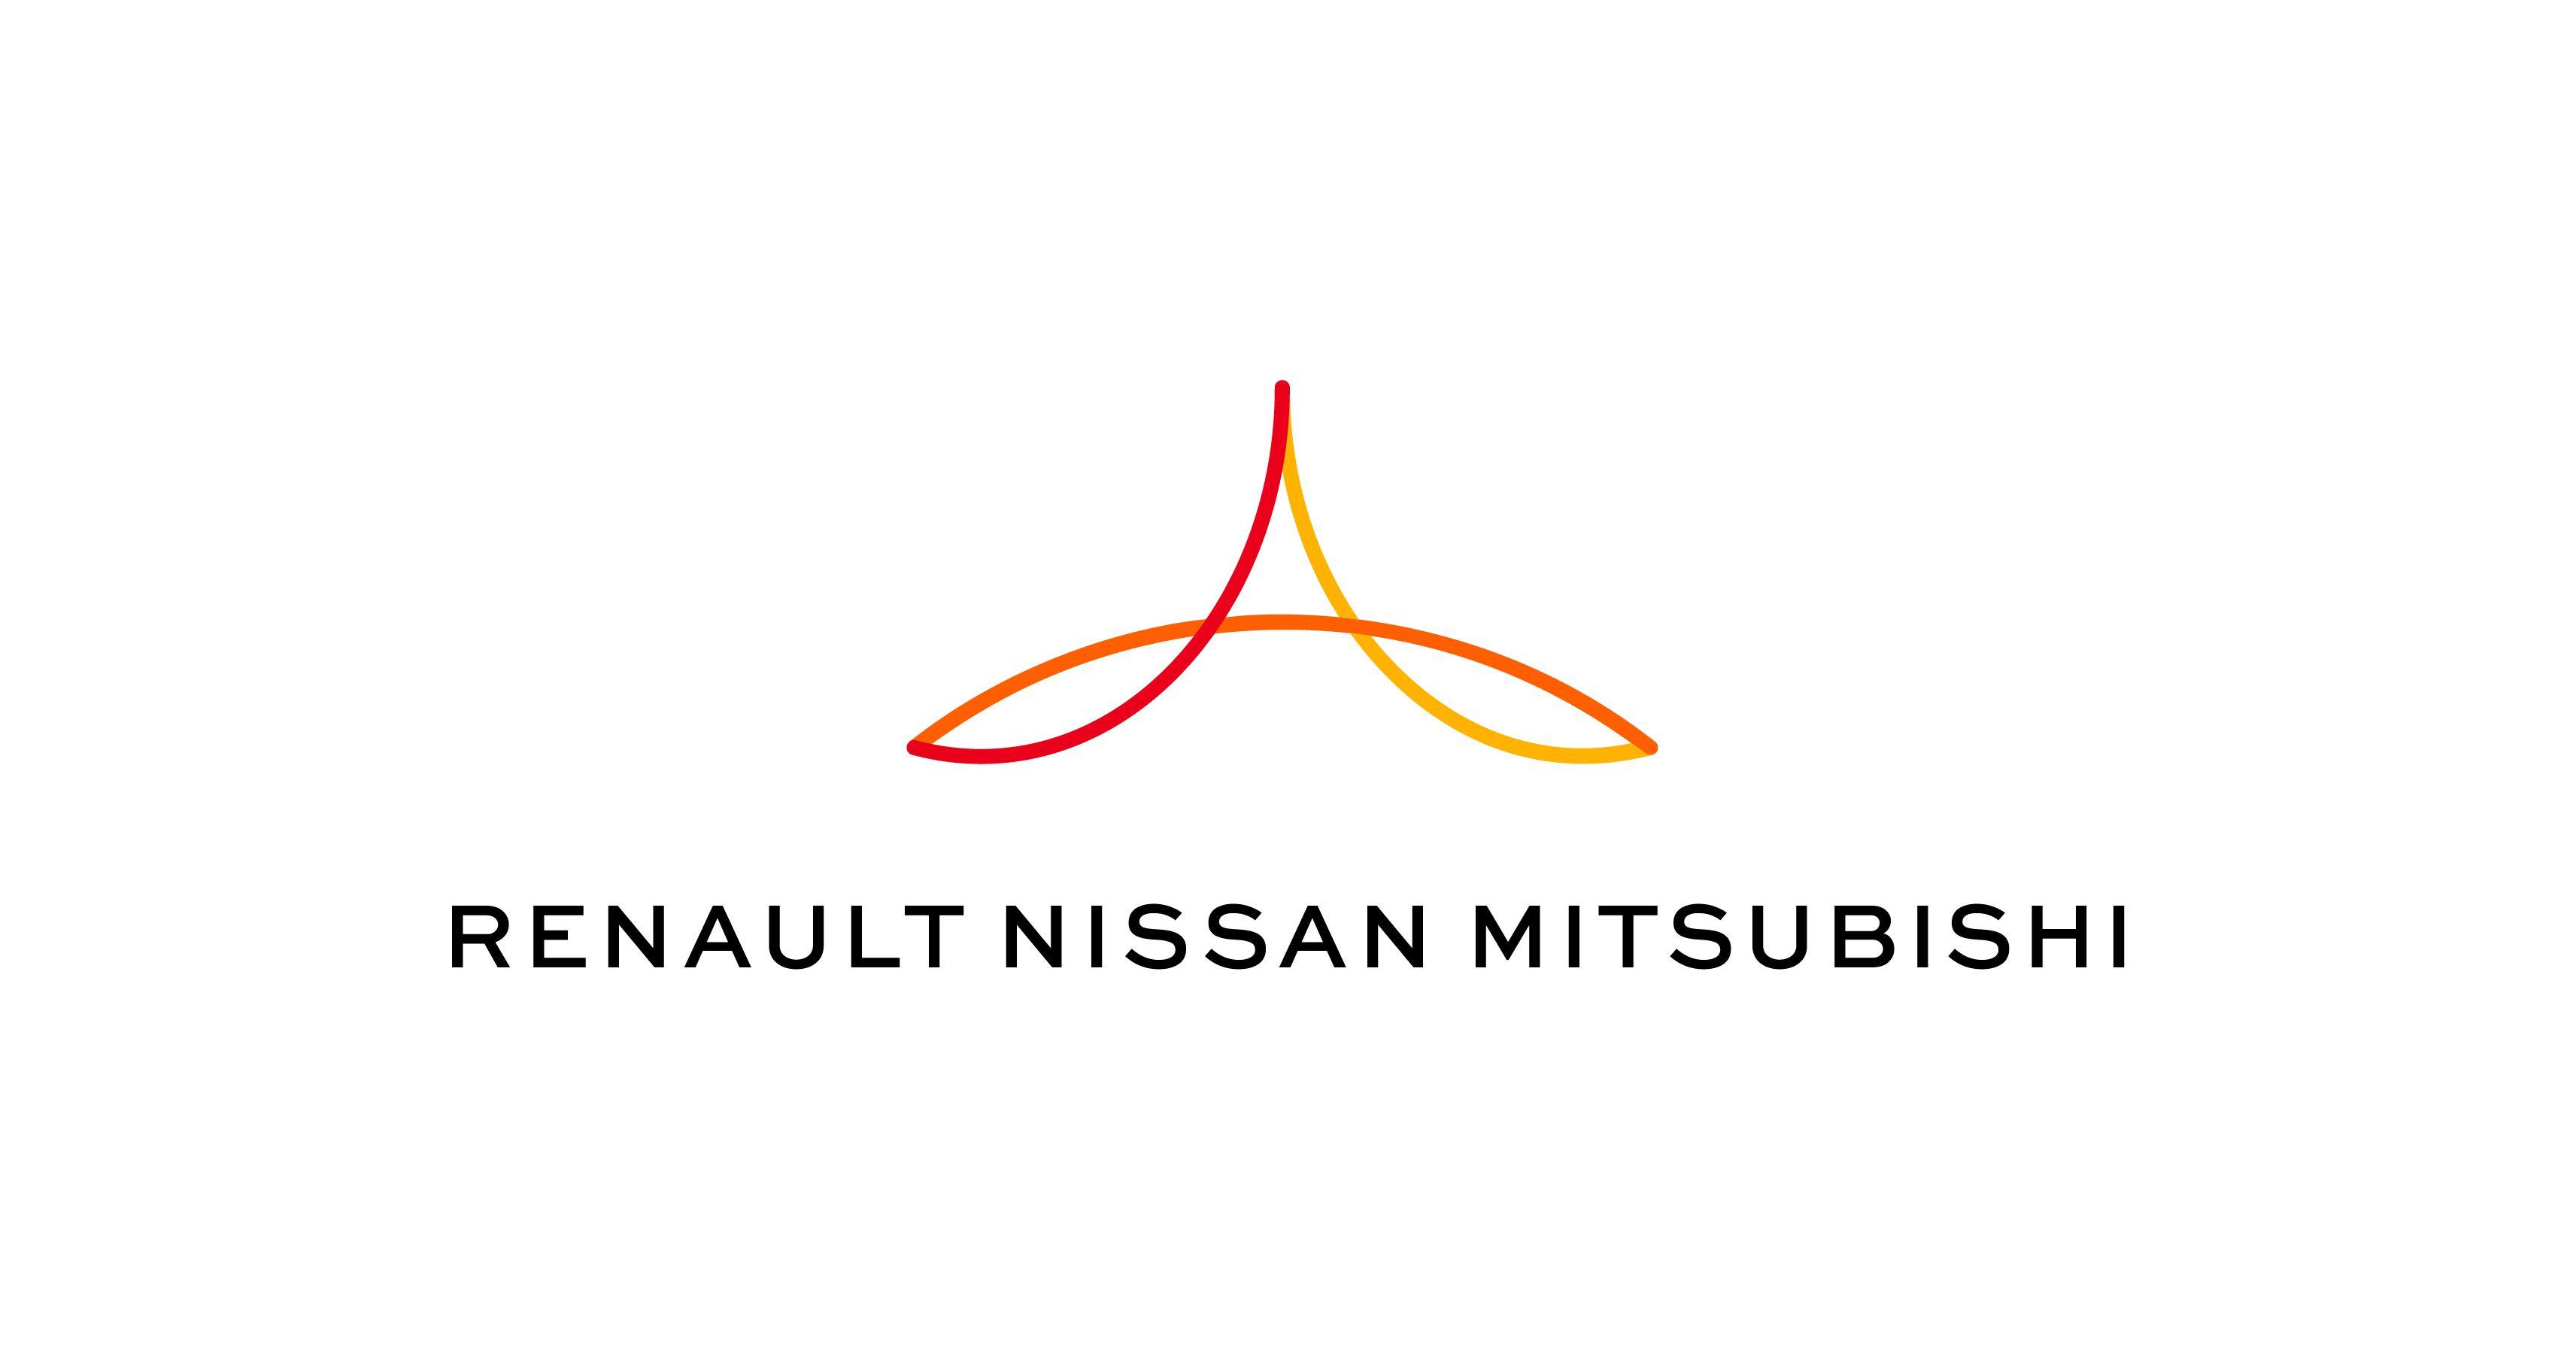 Didi Auto Logo - Renault-Nissan-Mitsubishi joins DiDi Chuxing in DiDi Auto Alliance ...